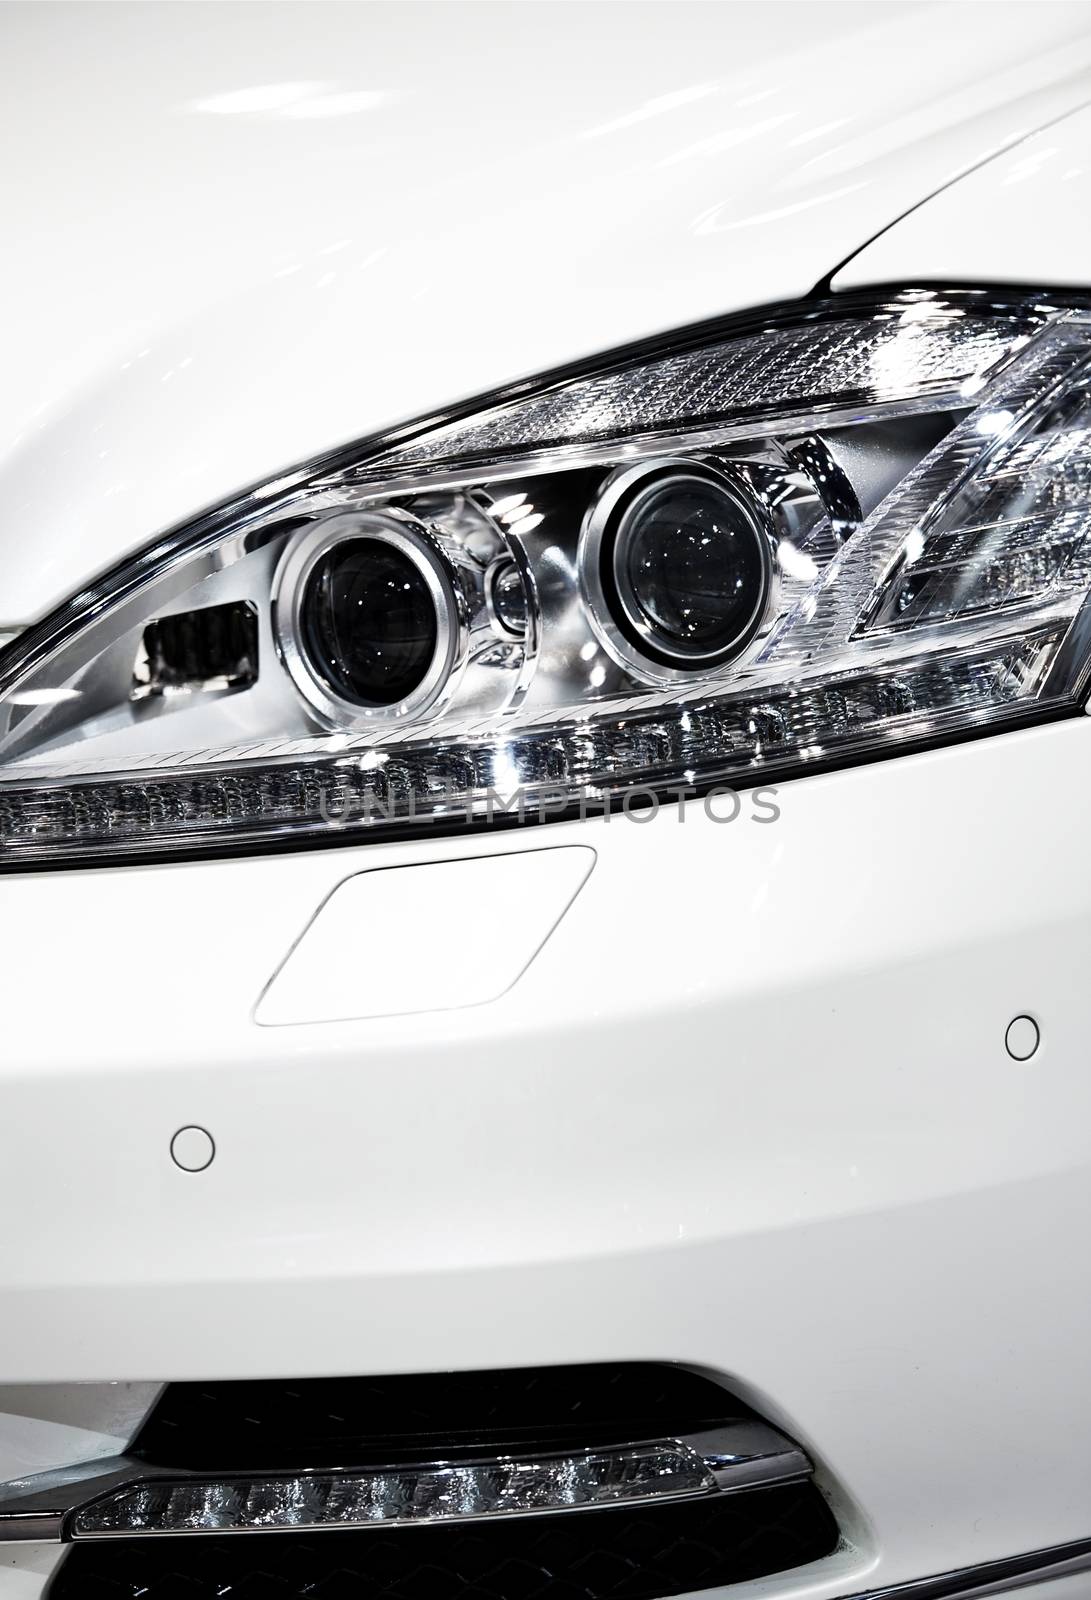 Modern Lens Car Headlight. Vehicle LED and Lens Lighting. Closeup